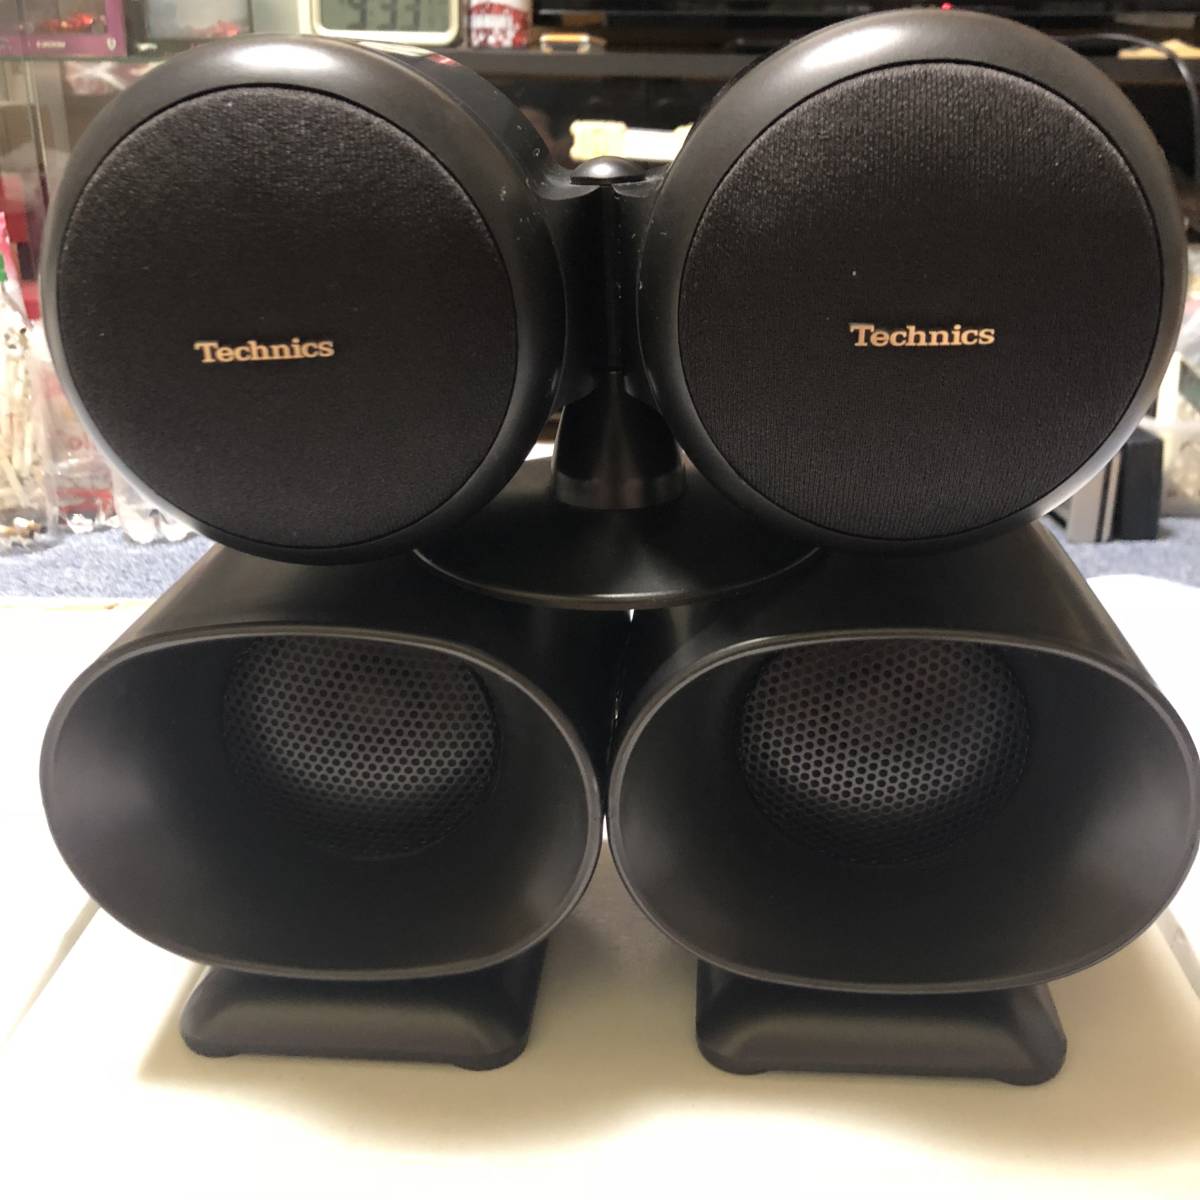  Vintage rare!Technics speaker!SB-C200!SB-CSS200-K! Technics set!